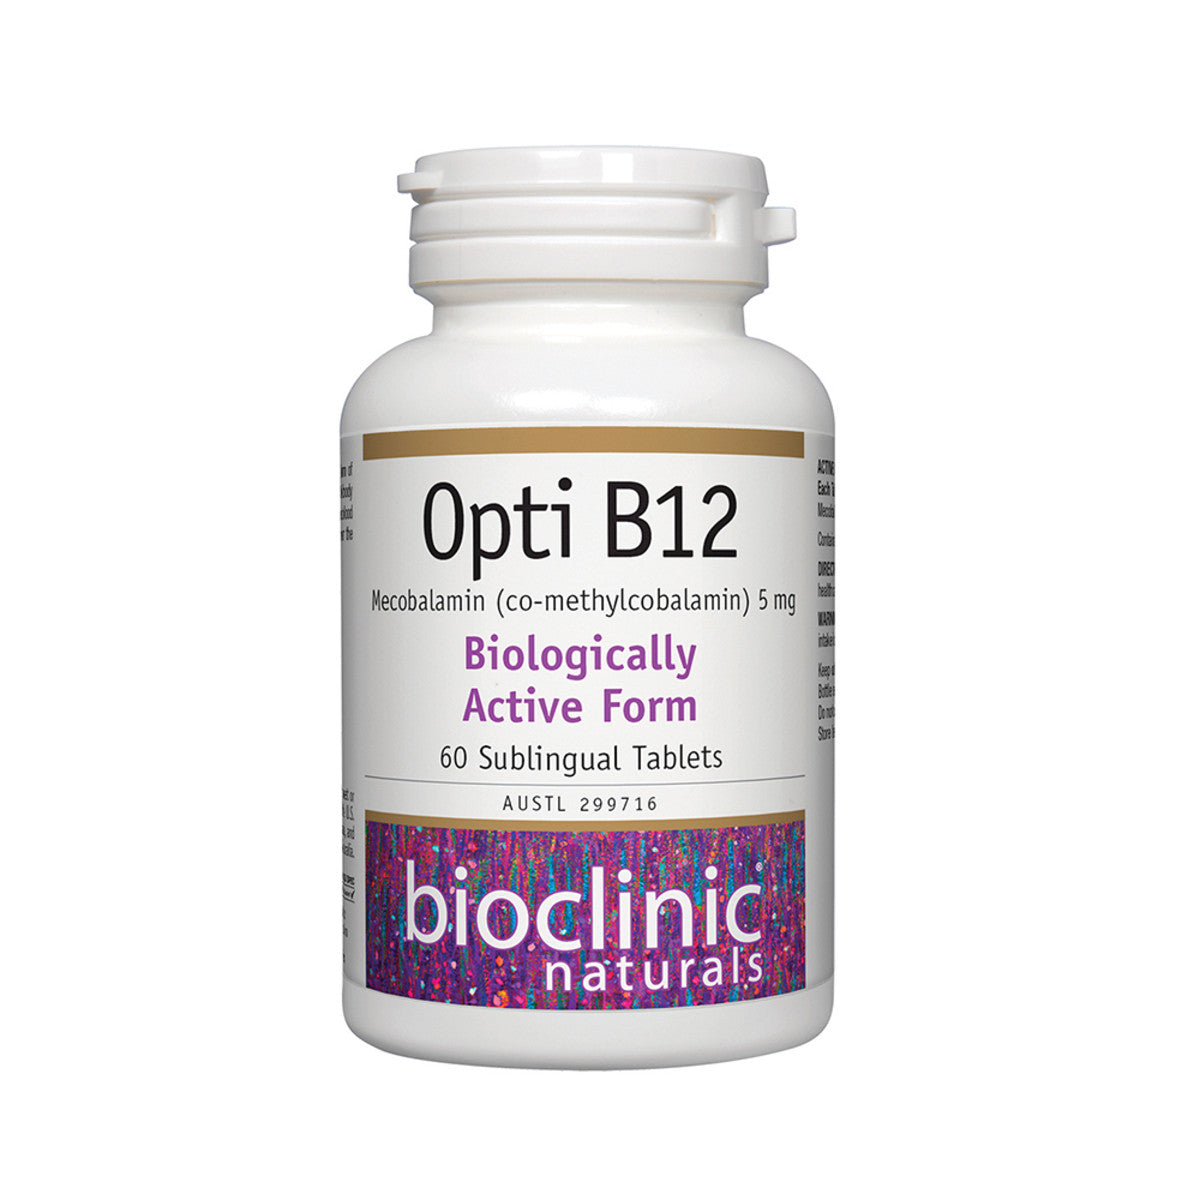 Bioclinic Naturals - Opti B12 Sublingual